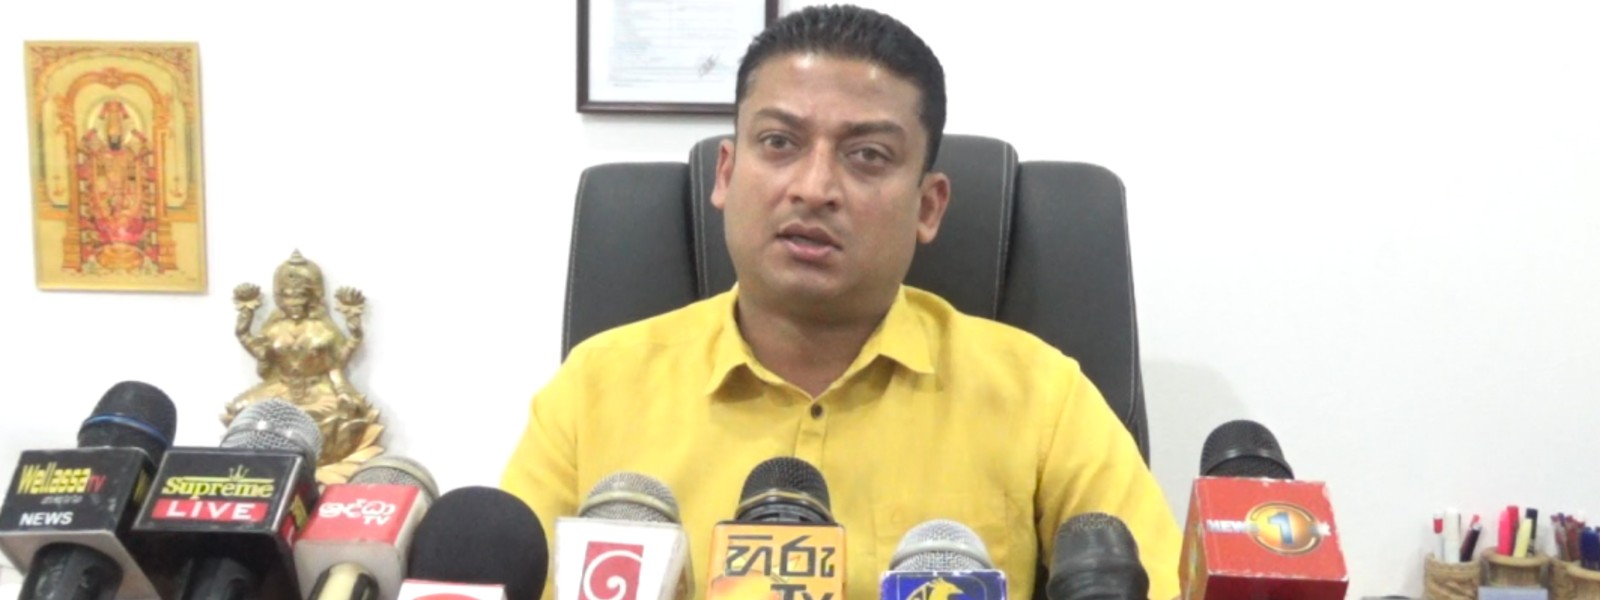 SL Minister says President should become 'Hitler'